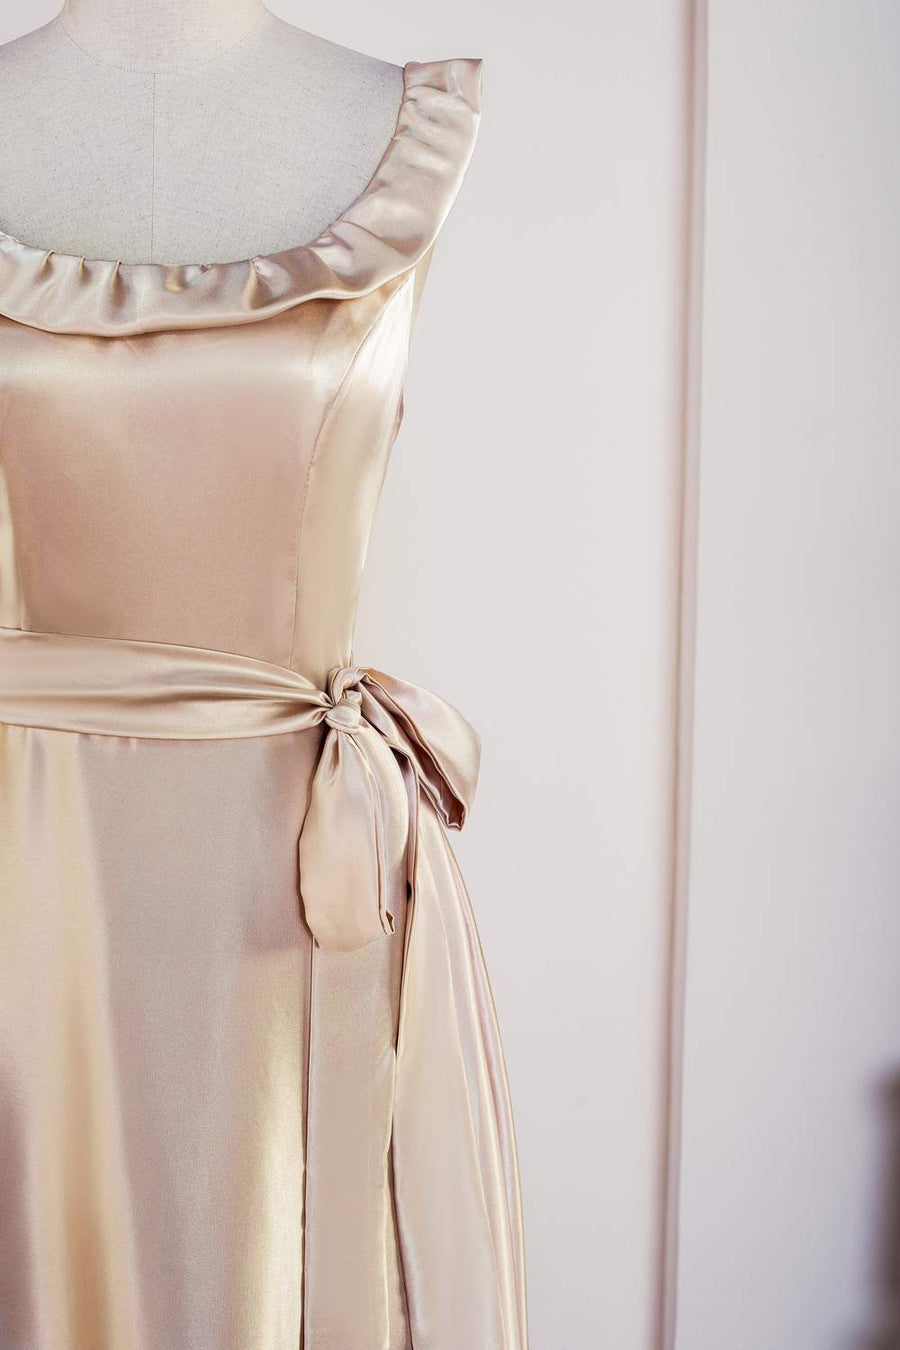 Champagne Ruffled Sleeveless Tea-Length Bridesmaid Dress with Sash